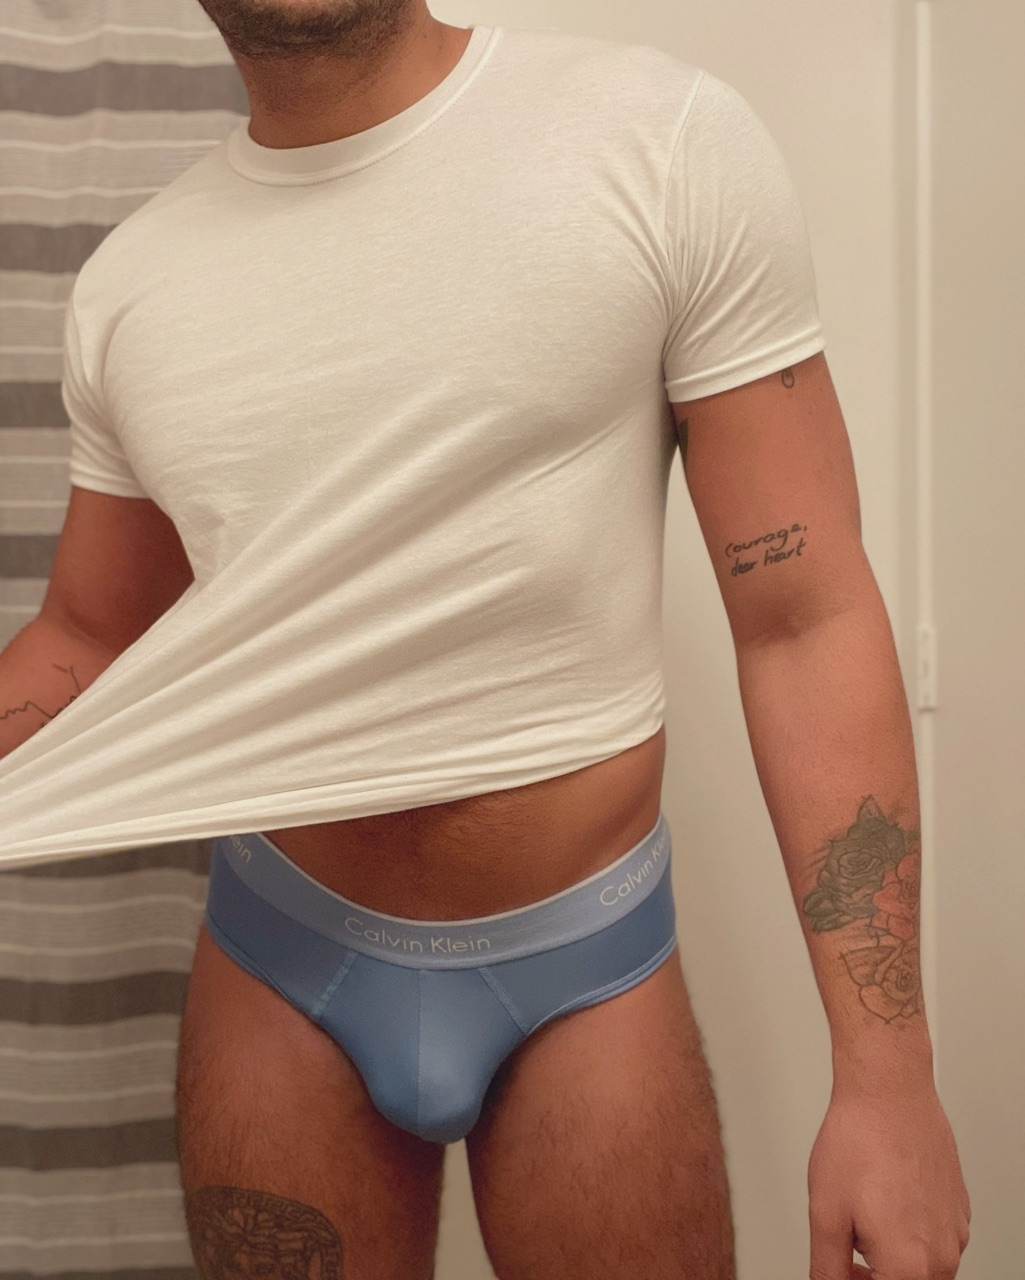 Hot men in underwear 497